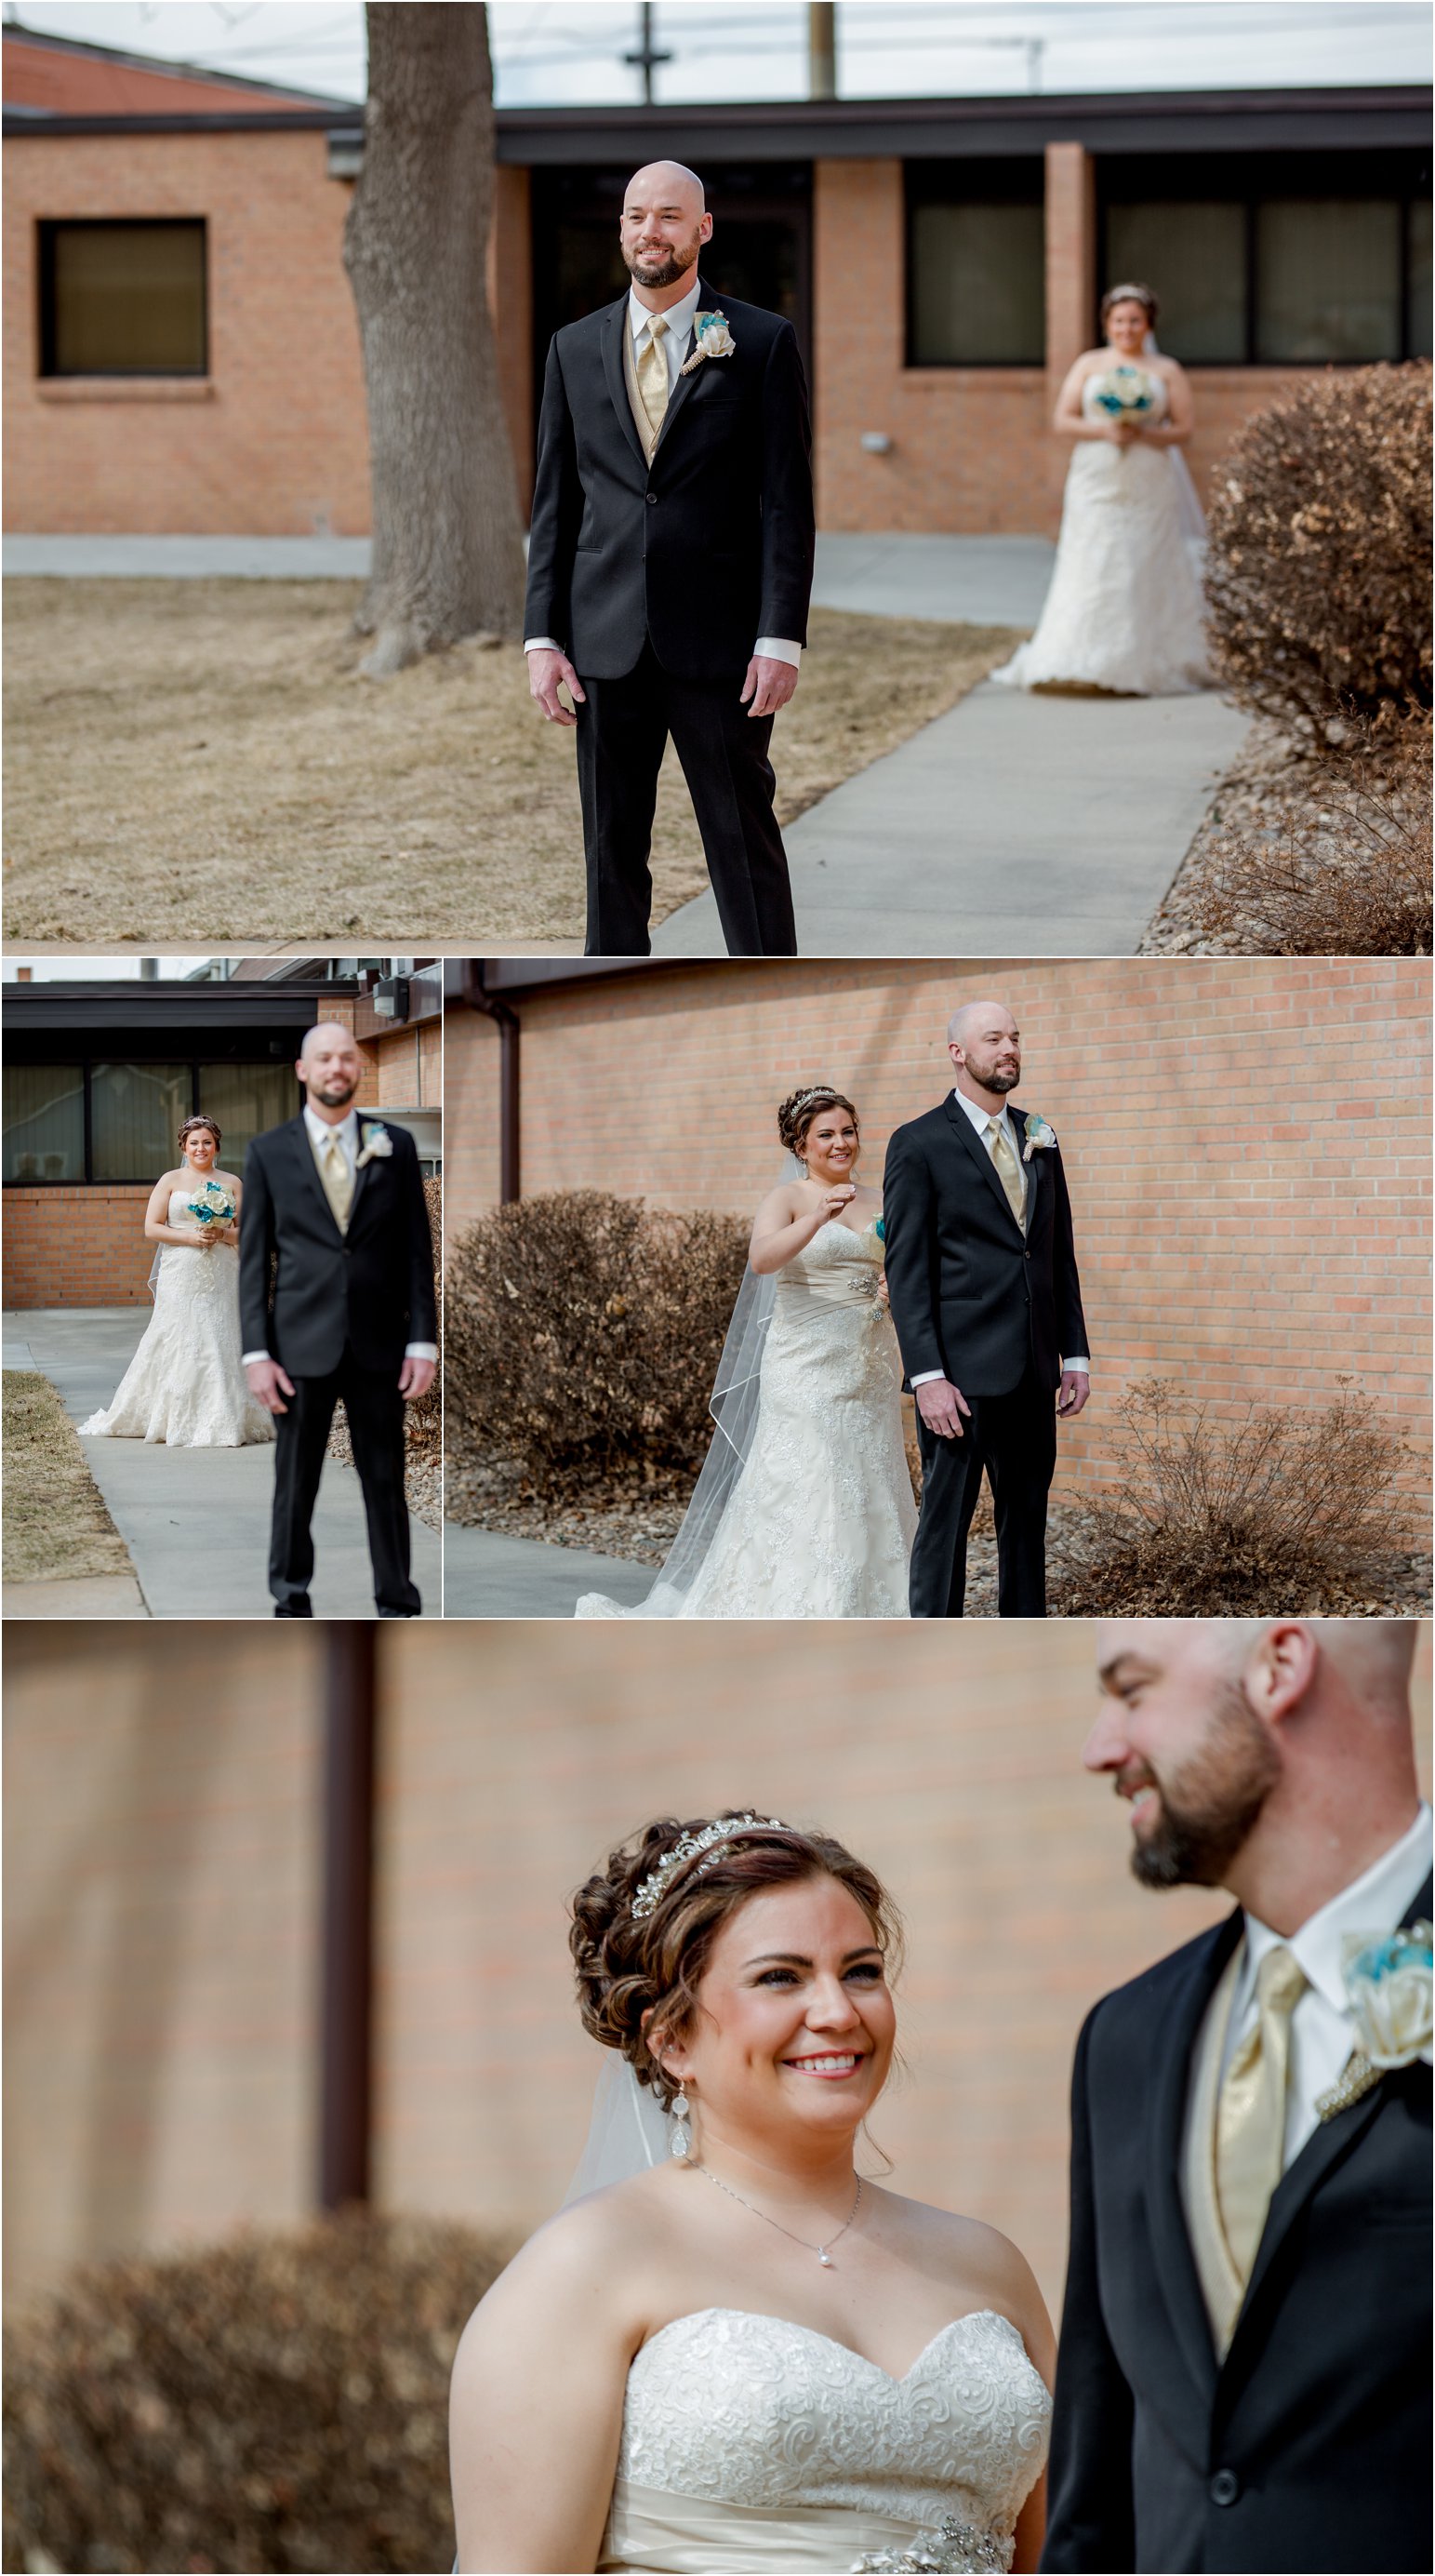 Minden, Nebraska Wedding with Kearney, Nebraska Reception by Greeley, Colorado Wedding Photographer